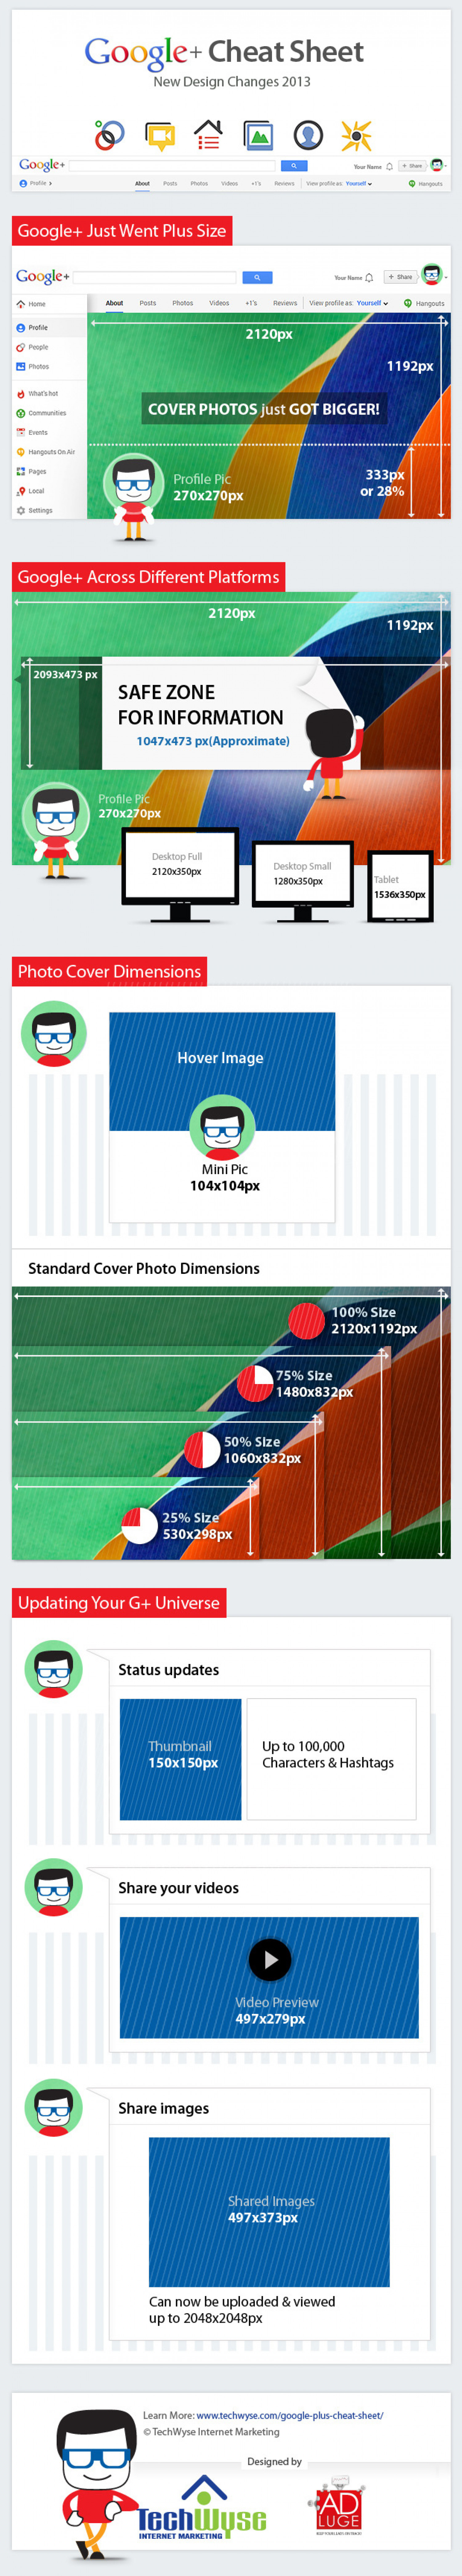 Google+ Cheat Sheet Infographic